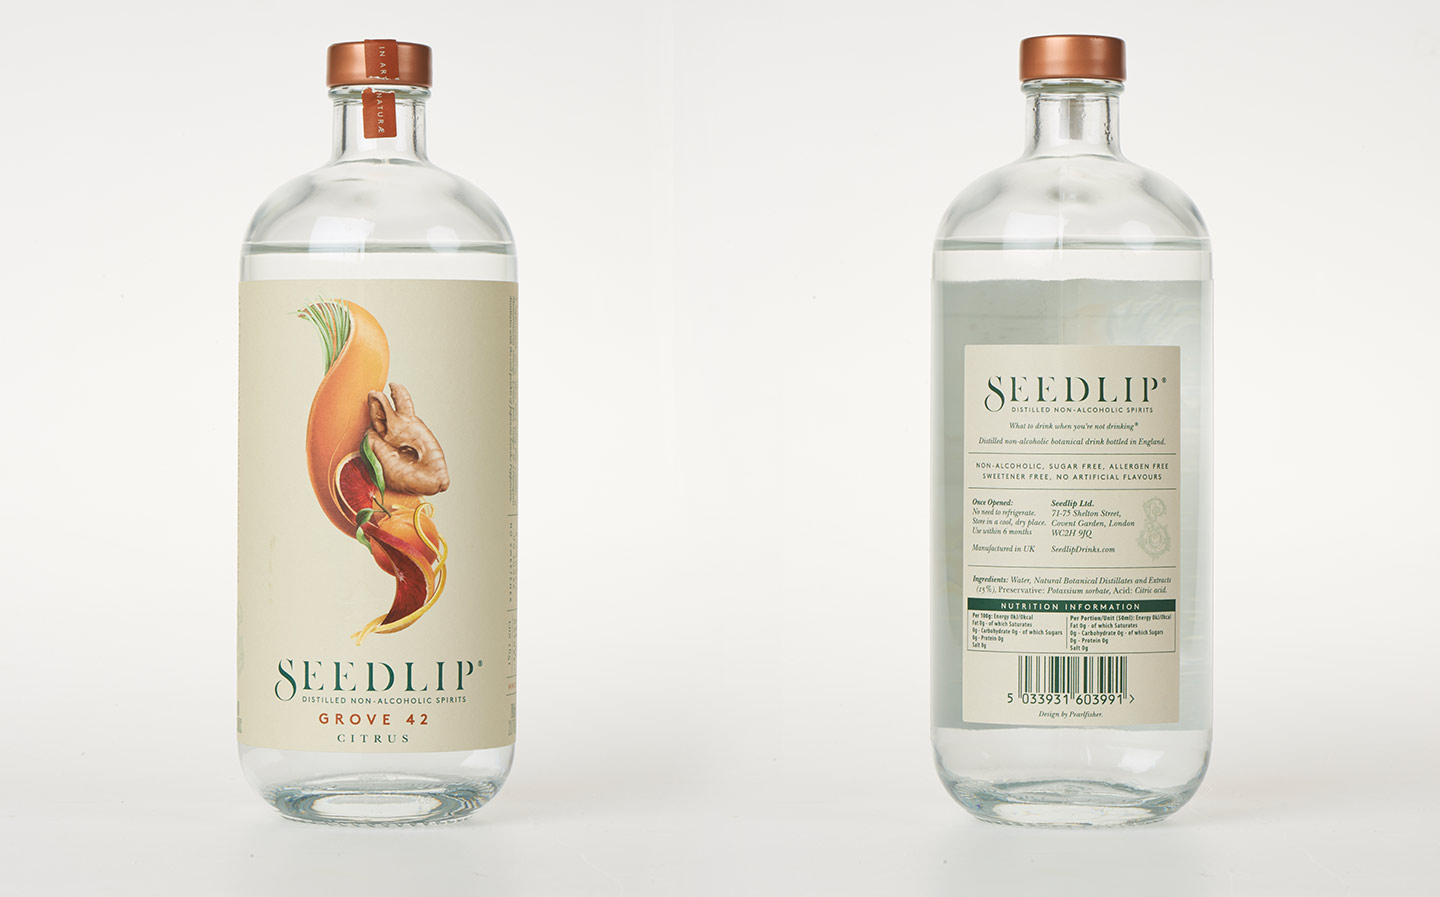 Seedlip Grove 42 non-alcoholic spirit review